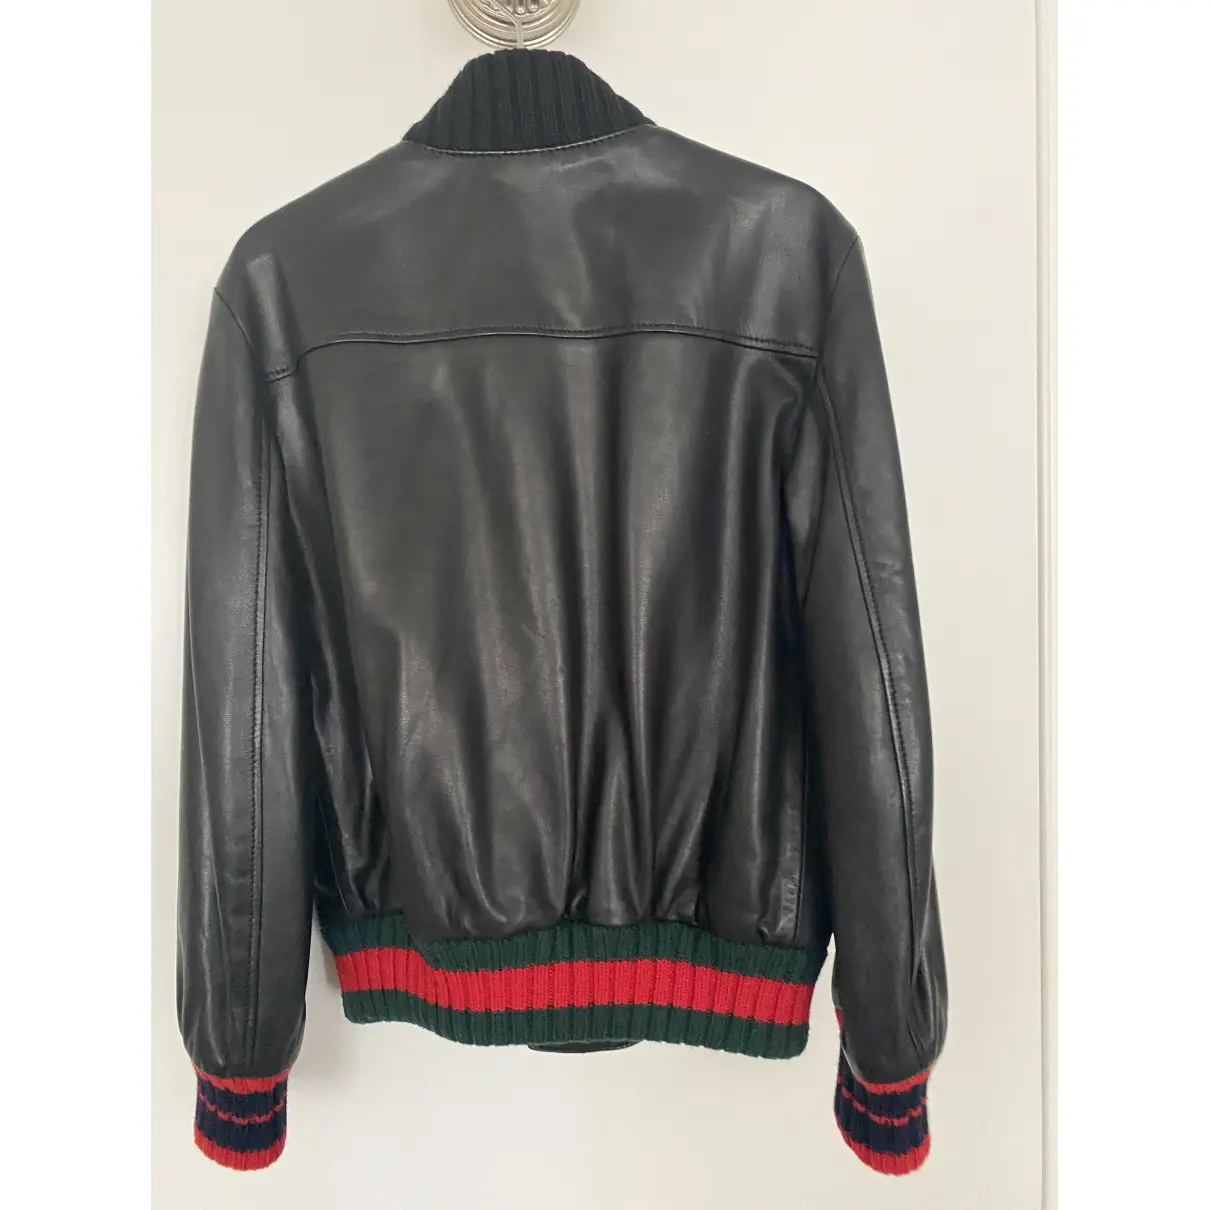 Buy Gucci Leather vest online